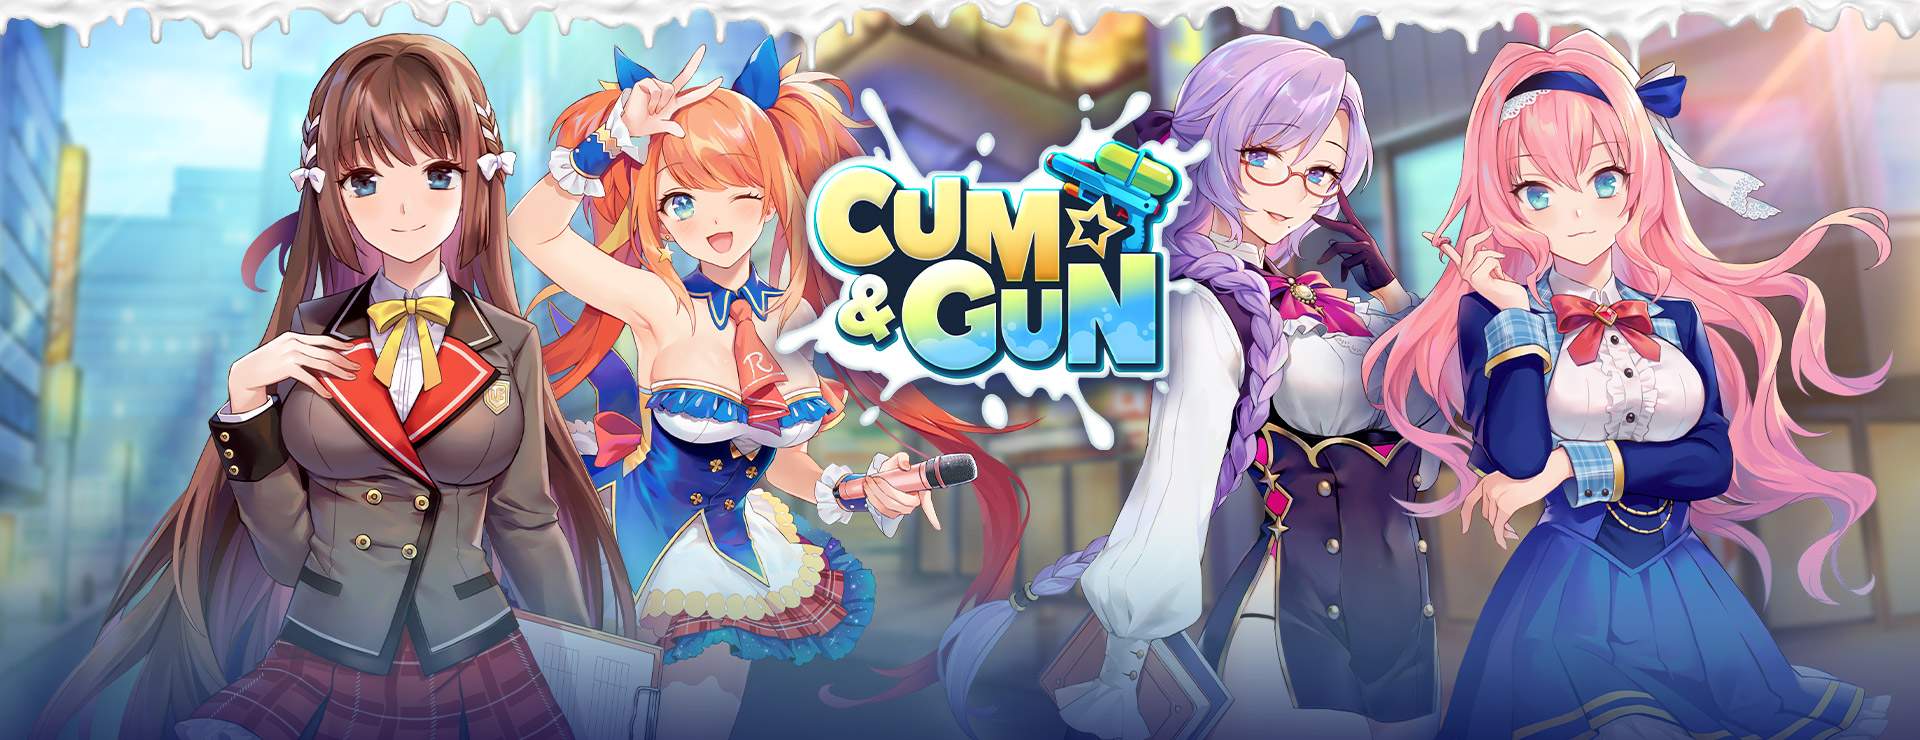 Cum & Gun - Action Adventure Game